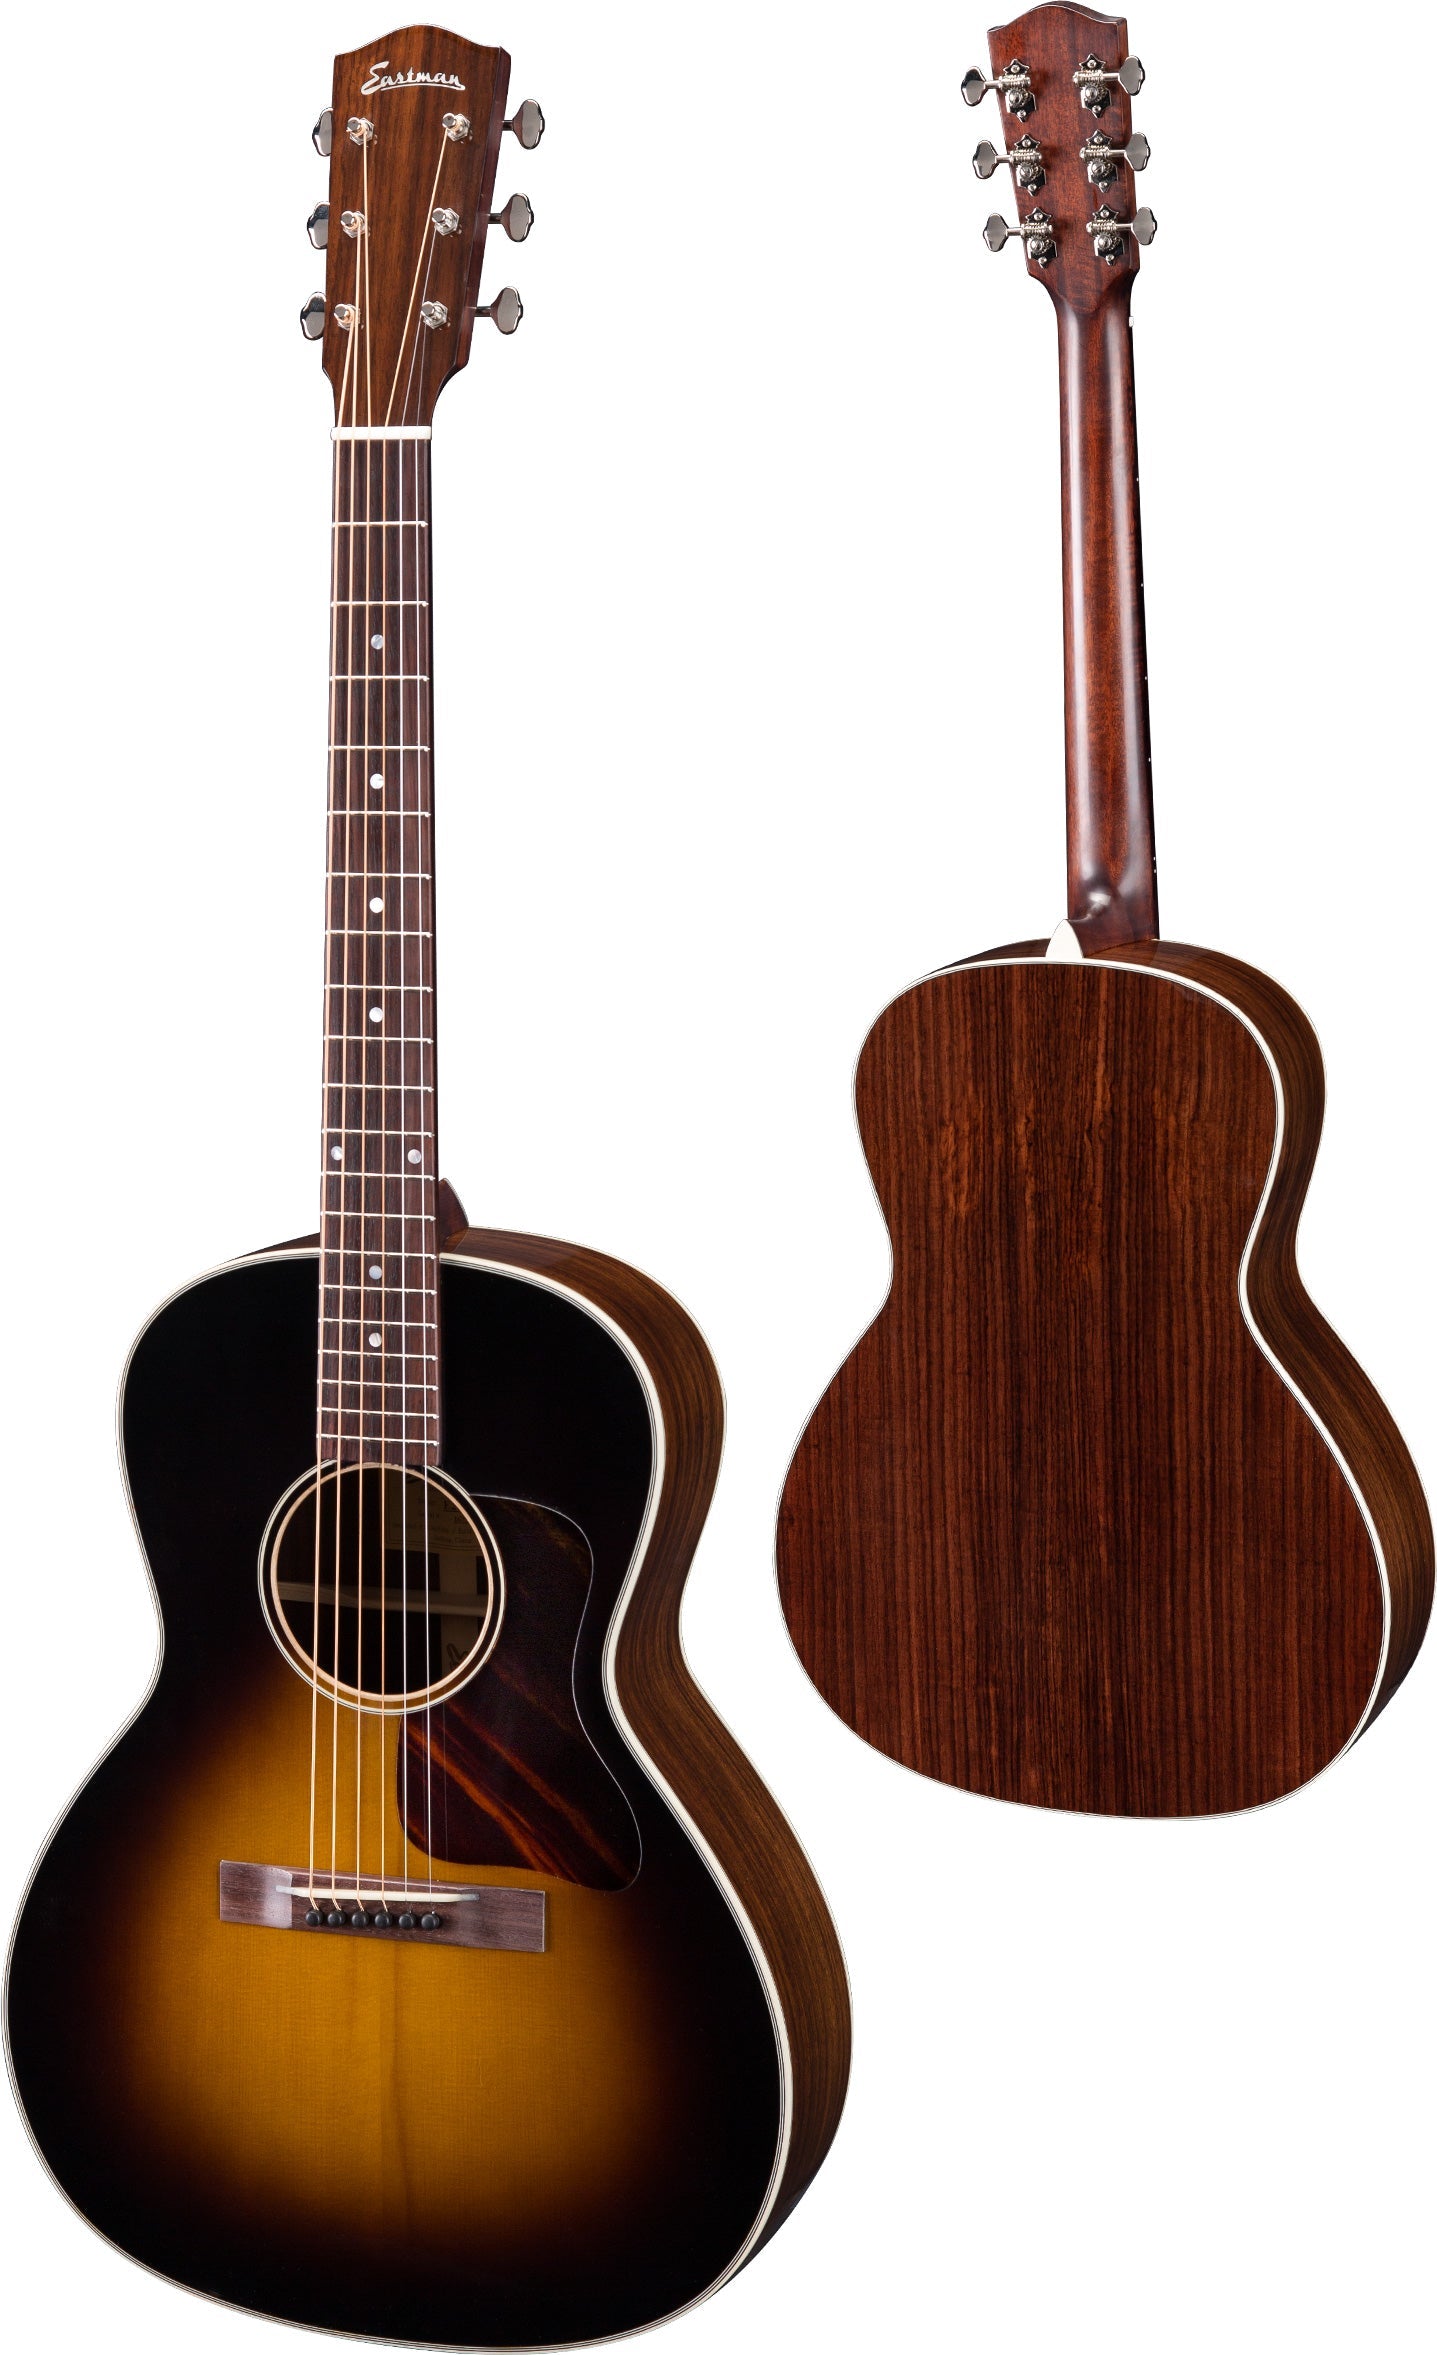 Eastman E20OOSS Antique Sunburst, Acoustic Guitar for sale at Richards Guitars.